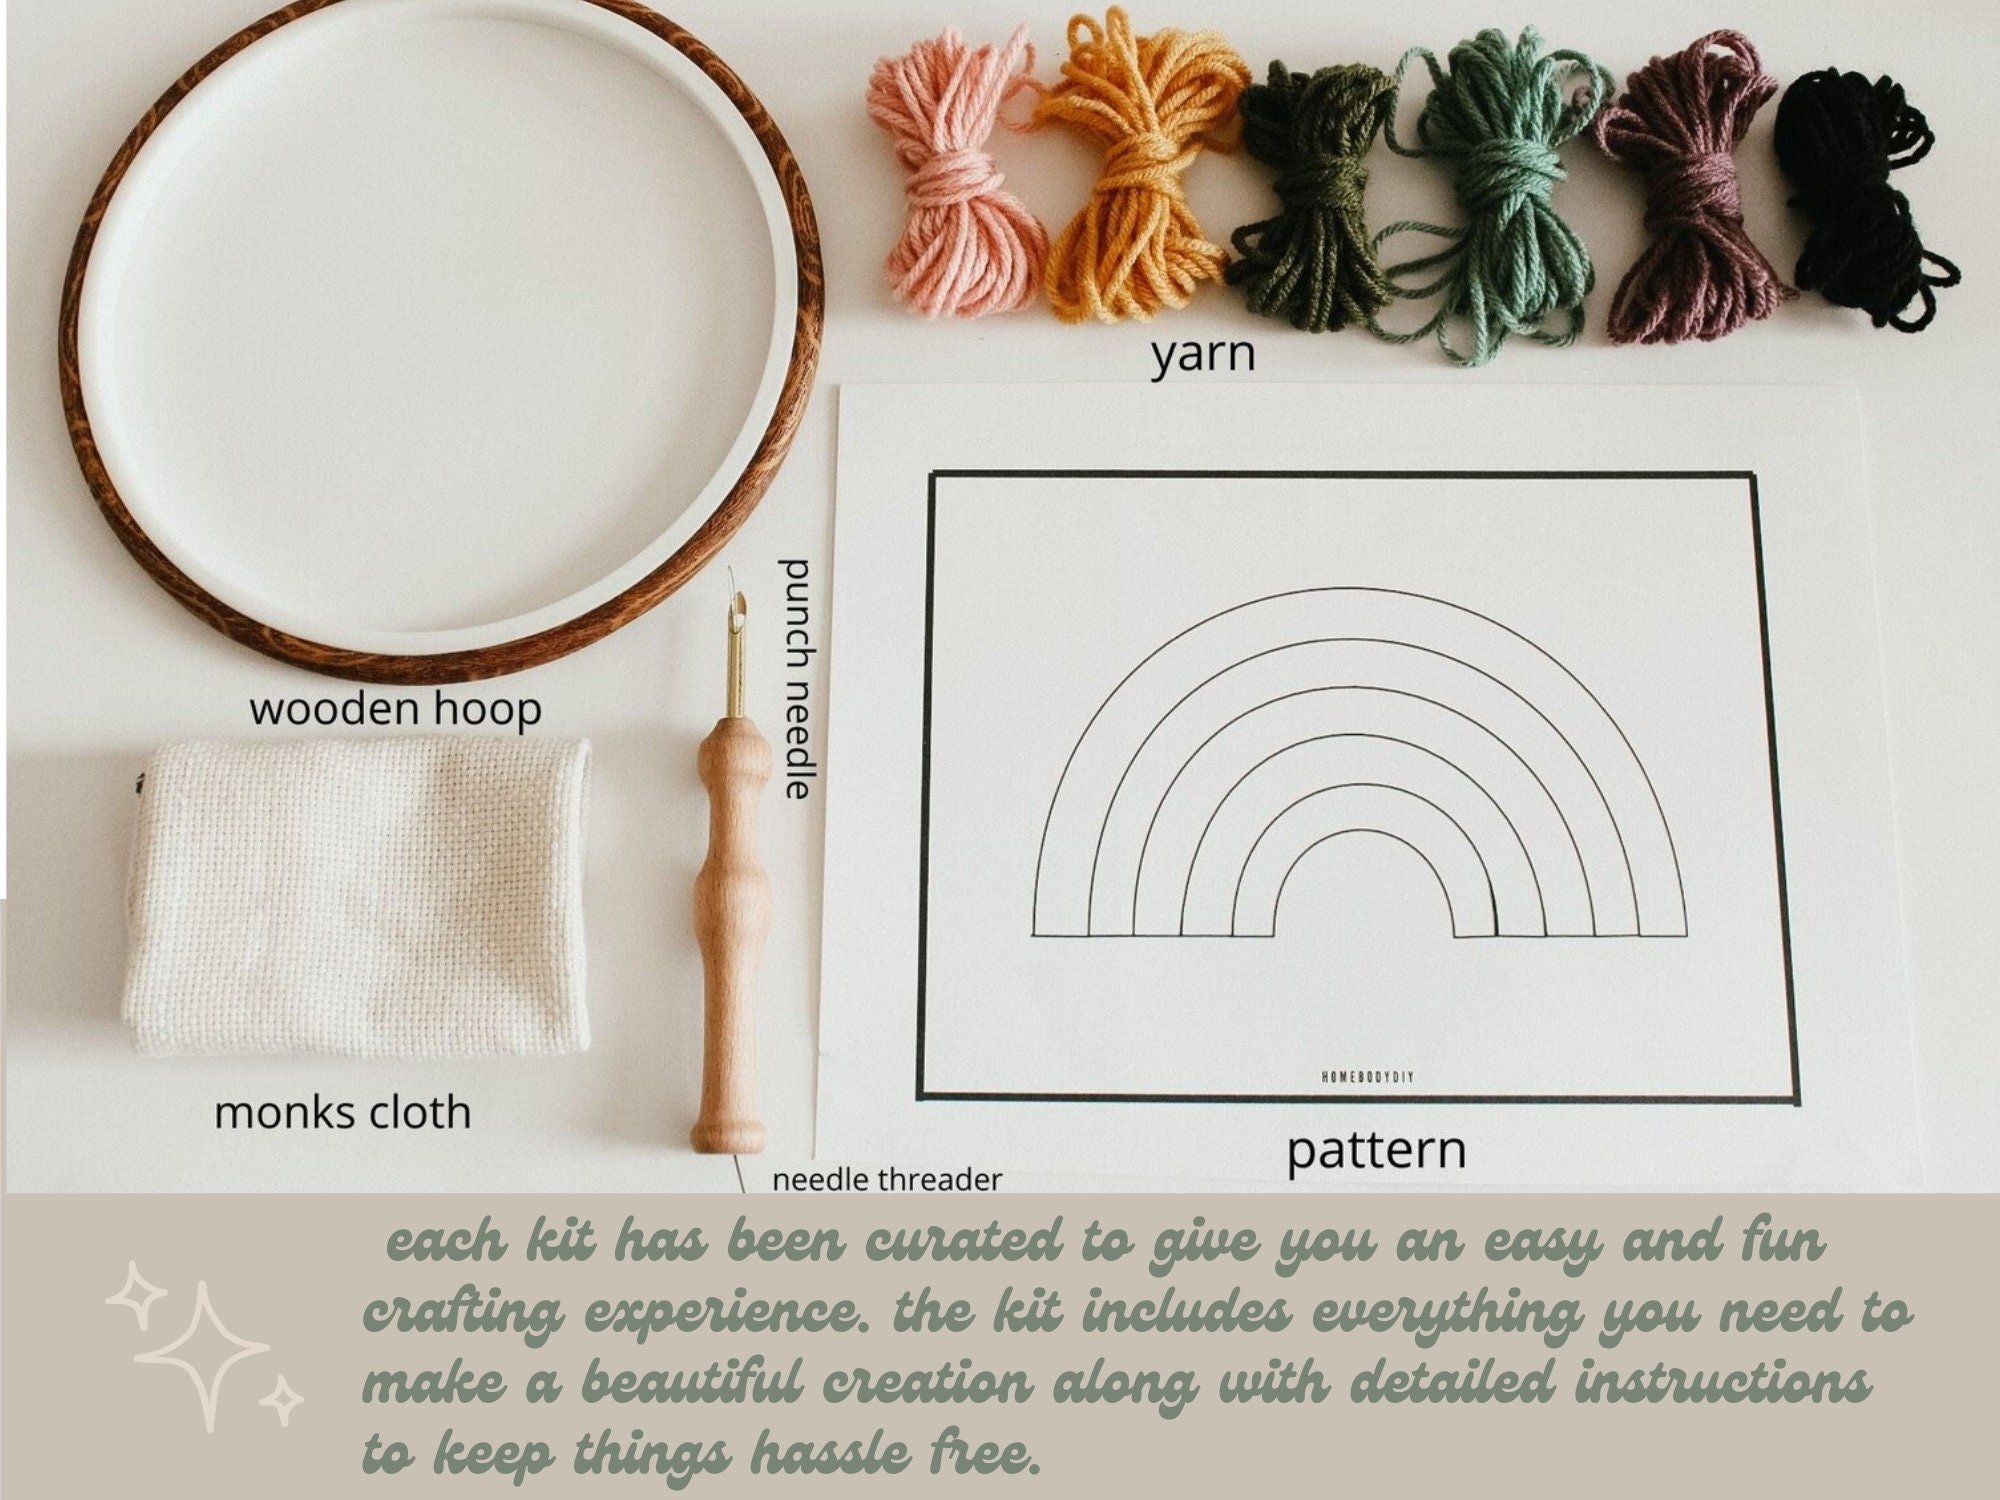 DIY punch needle kit, clouds, craft kit, crafty gift, rug hooking